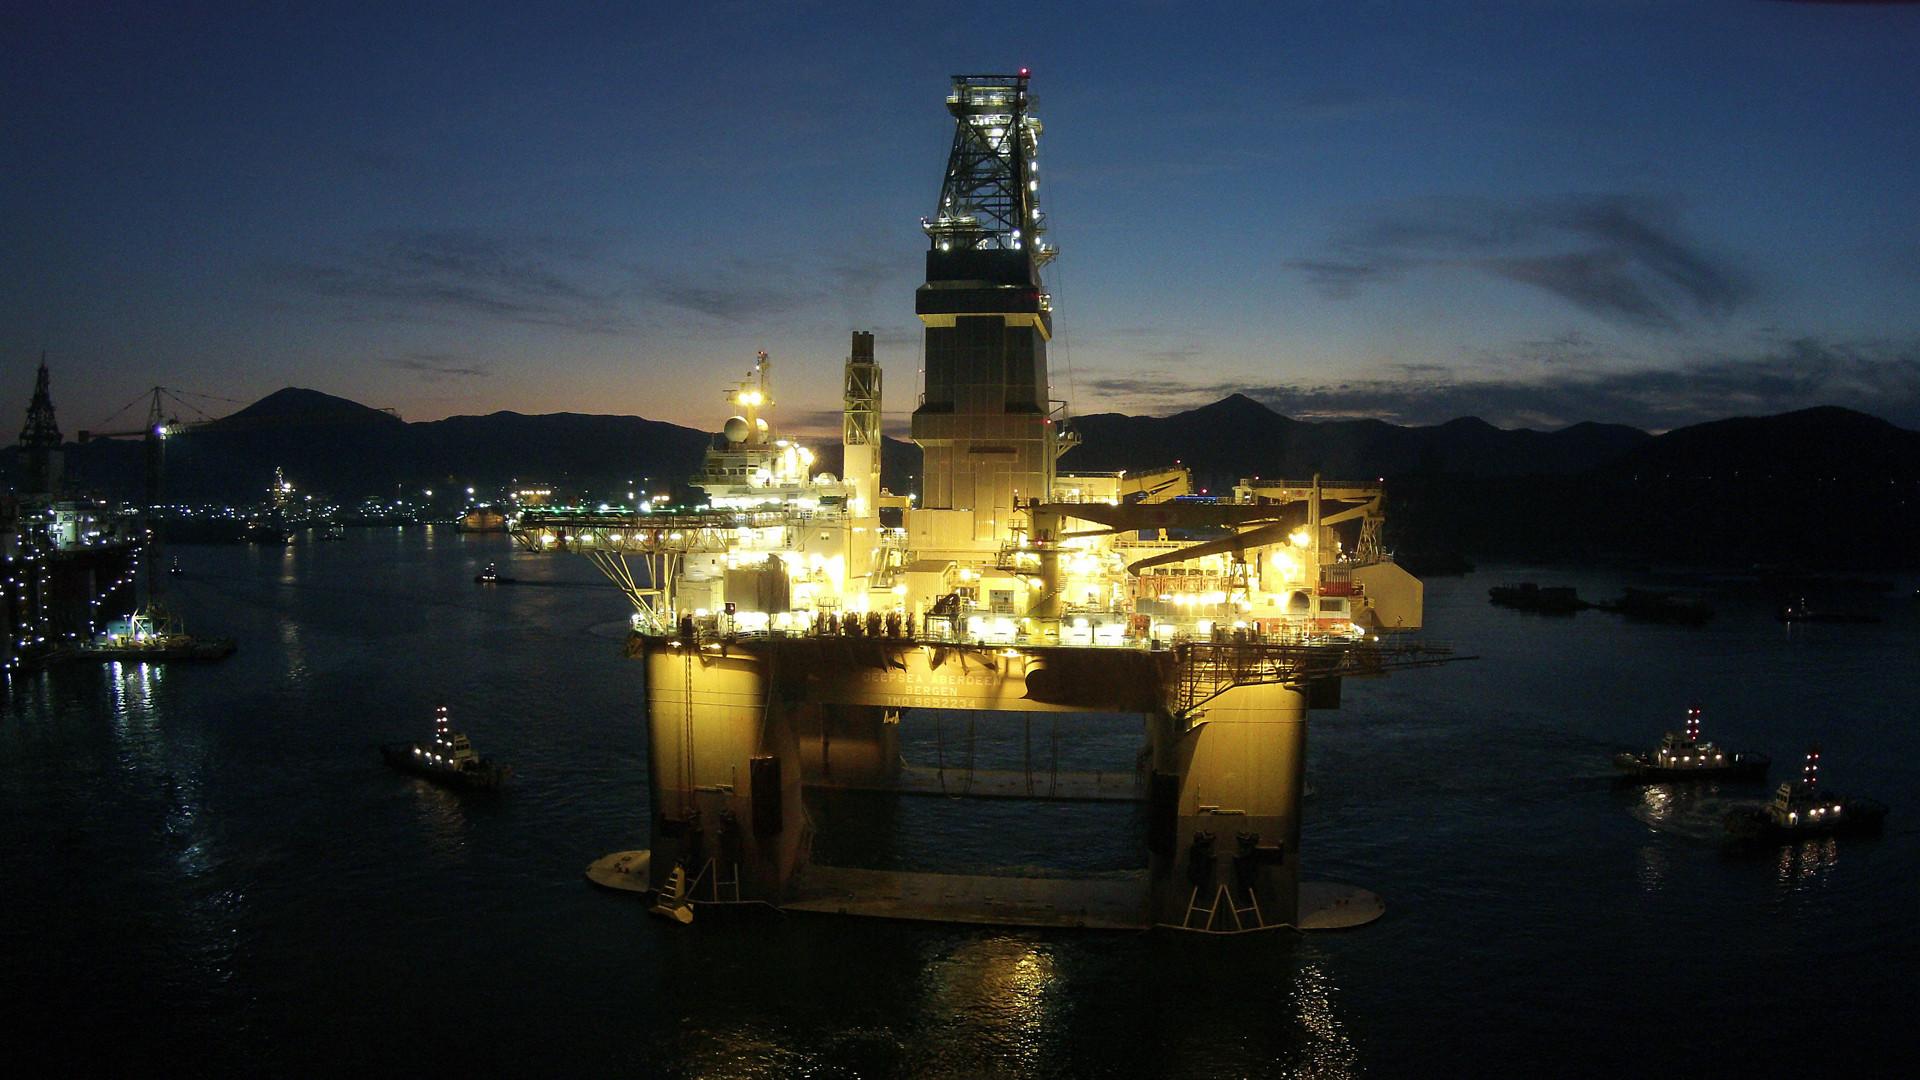 Deepsea Aberdeen rig - Odfjell Drilling